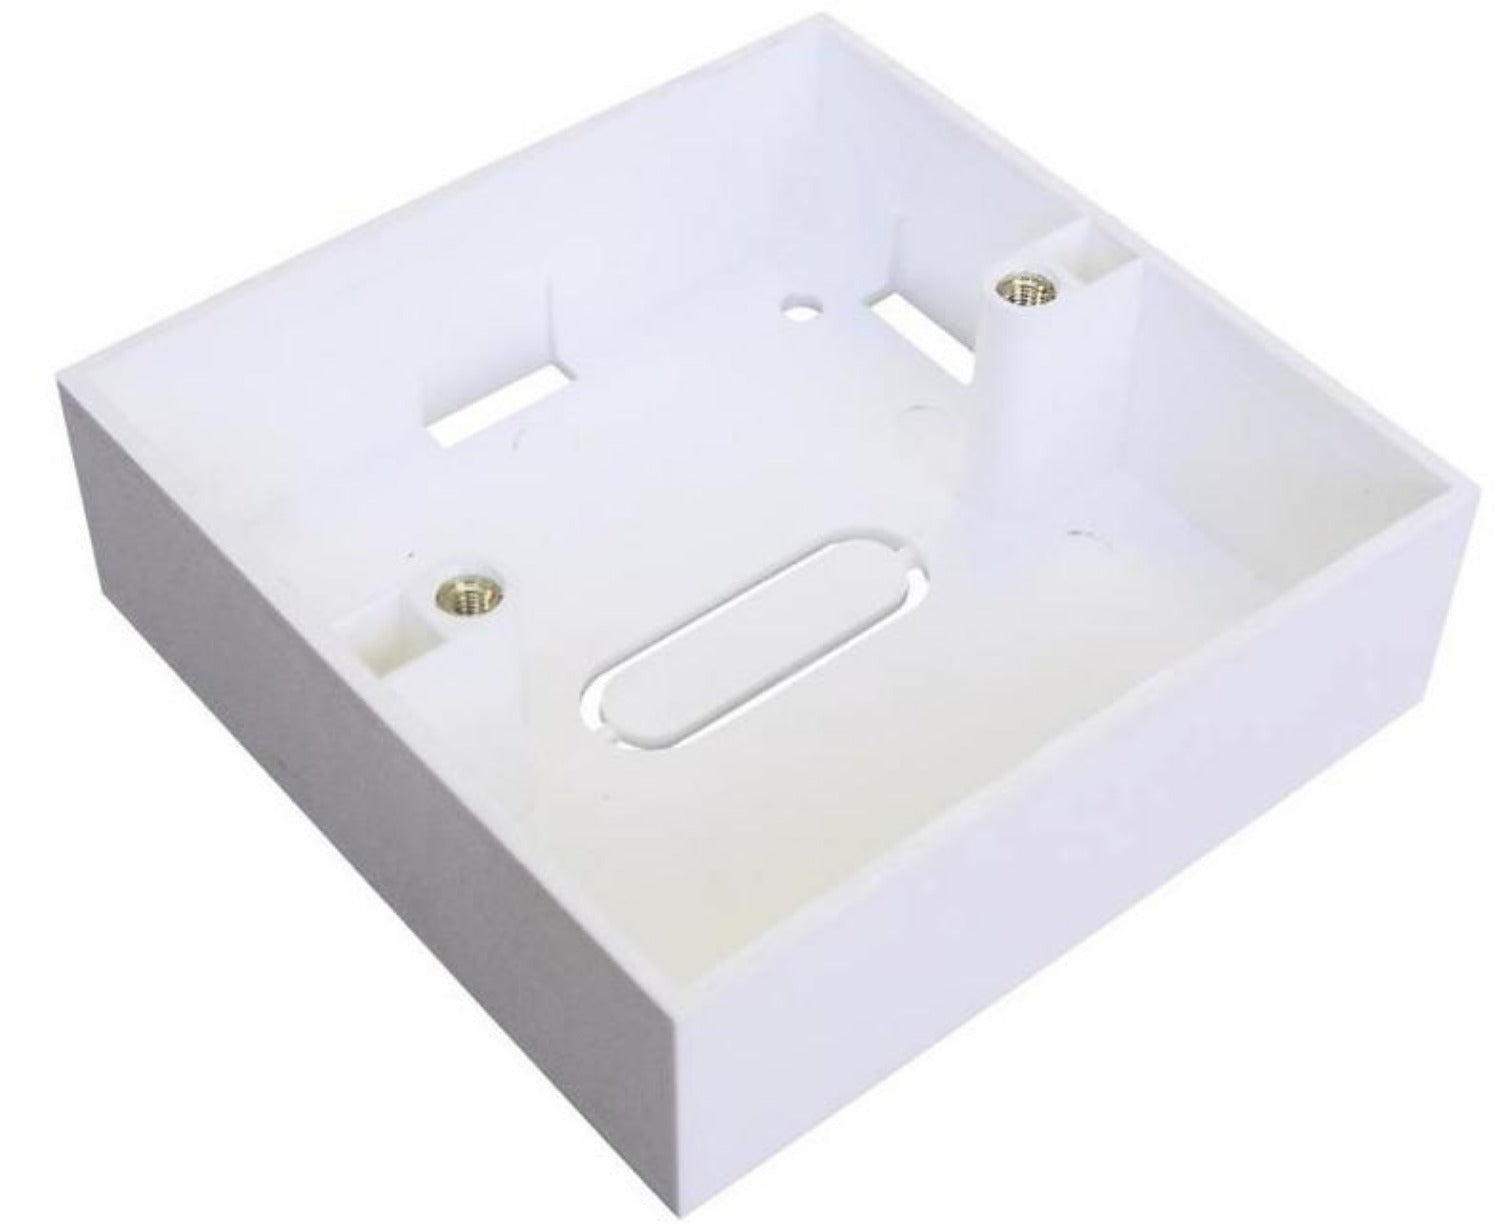 White surface mount box